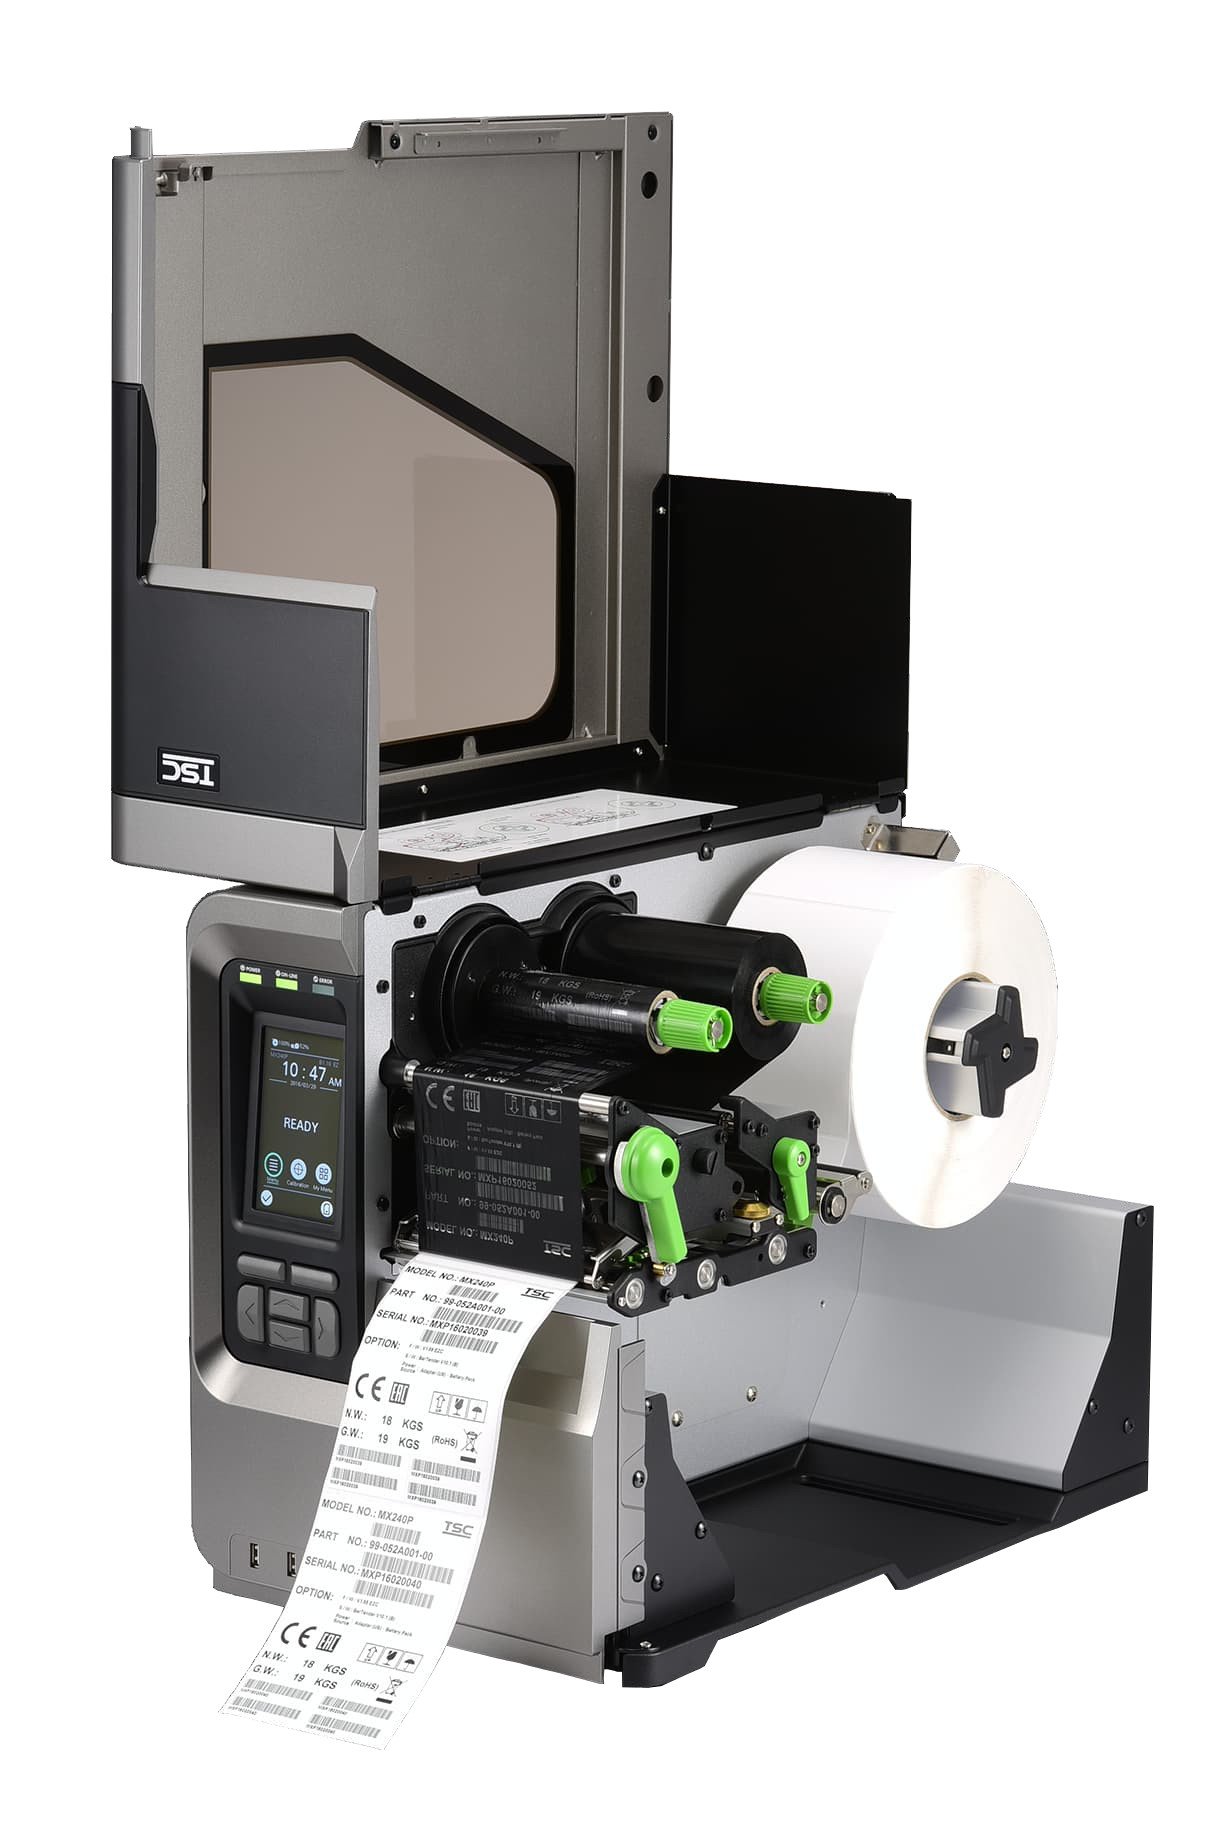 TSC MX241P Industriedrucker